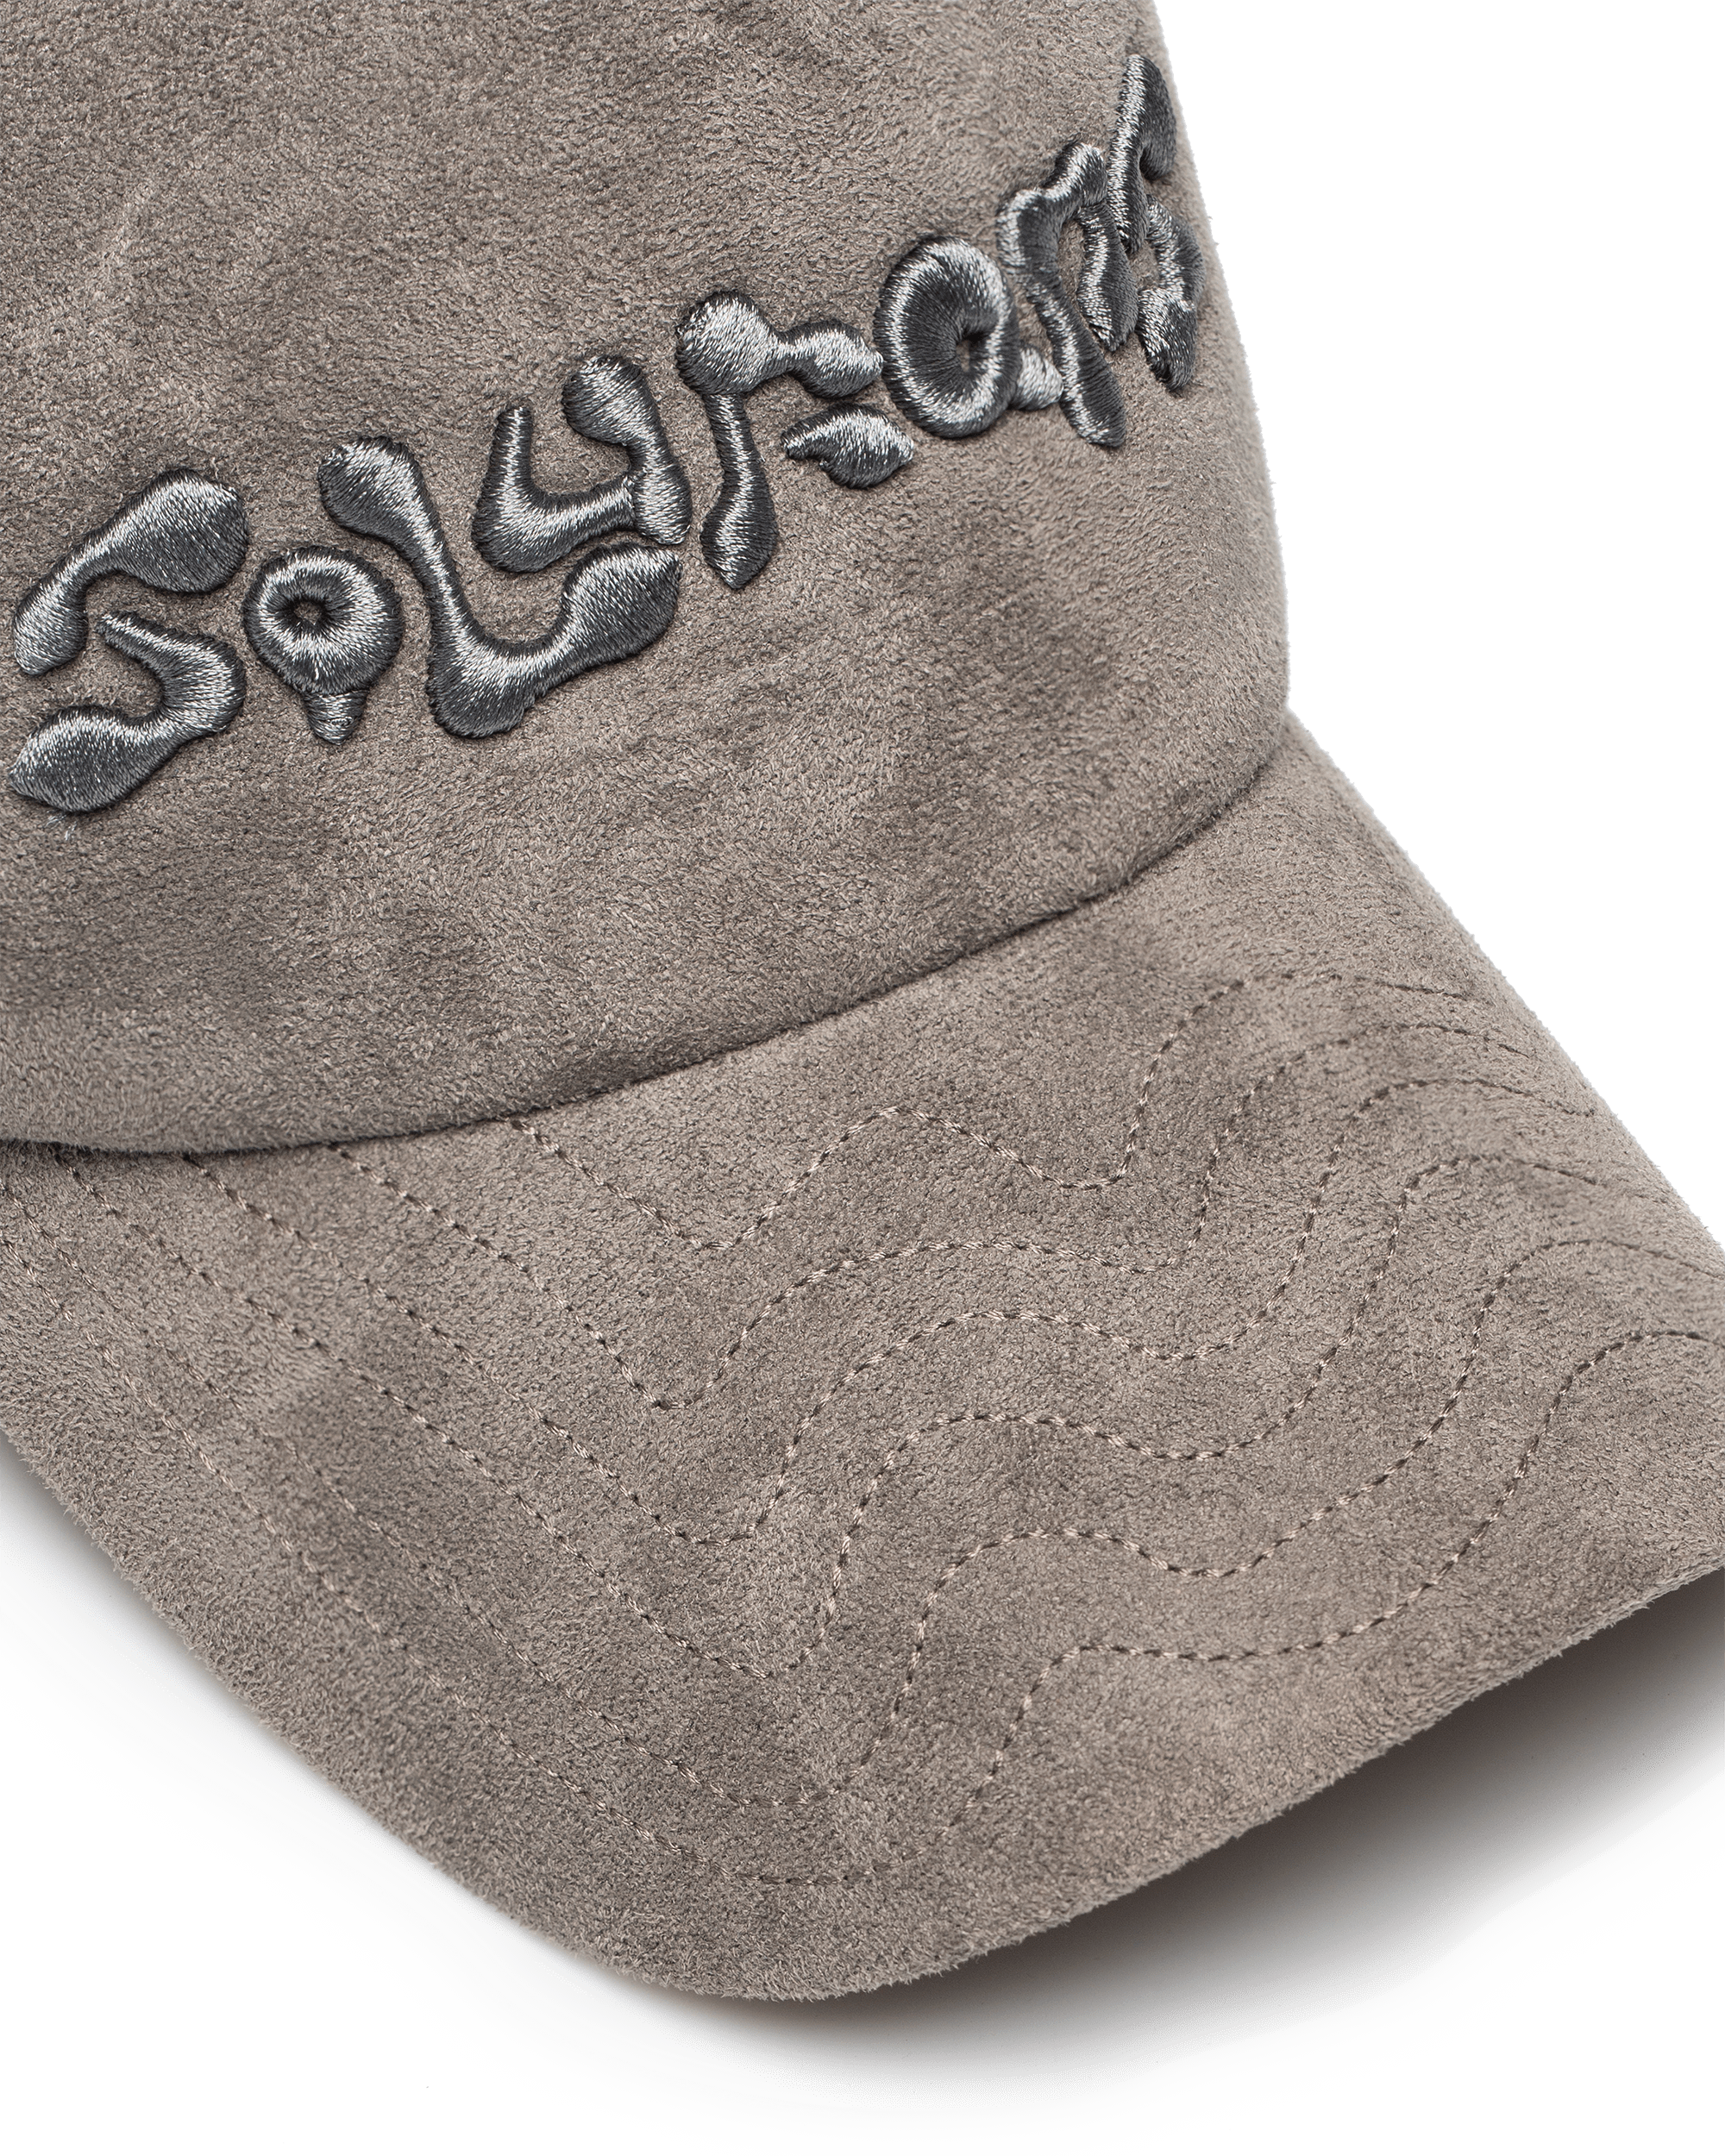 'WAV' suede cap, grey